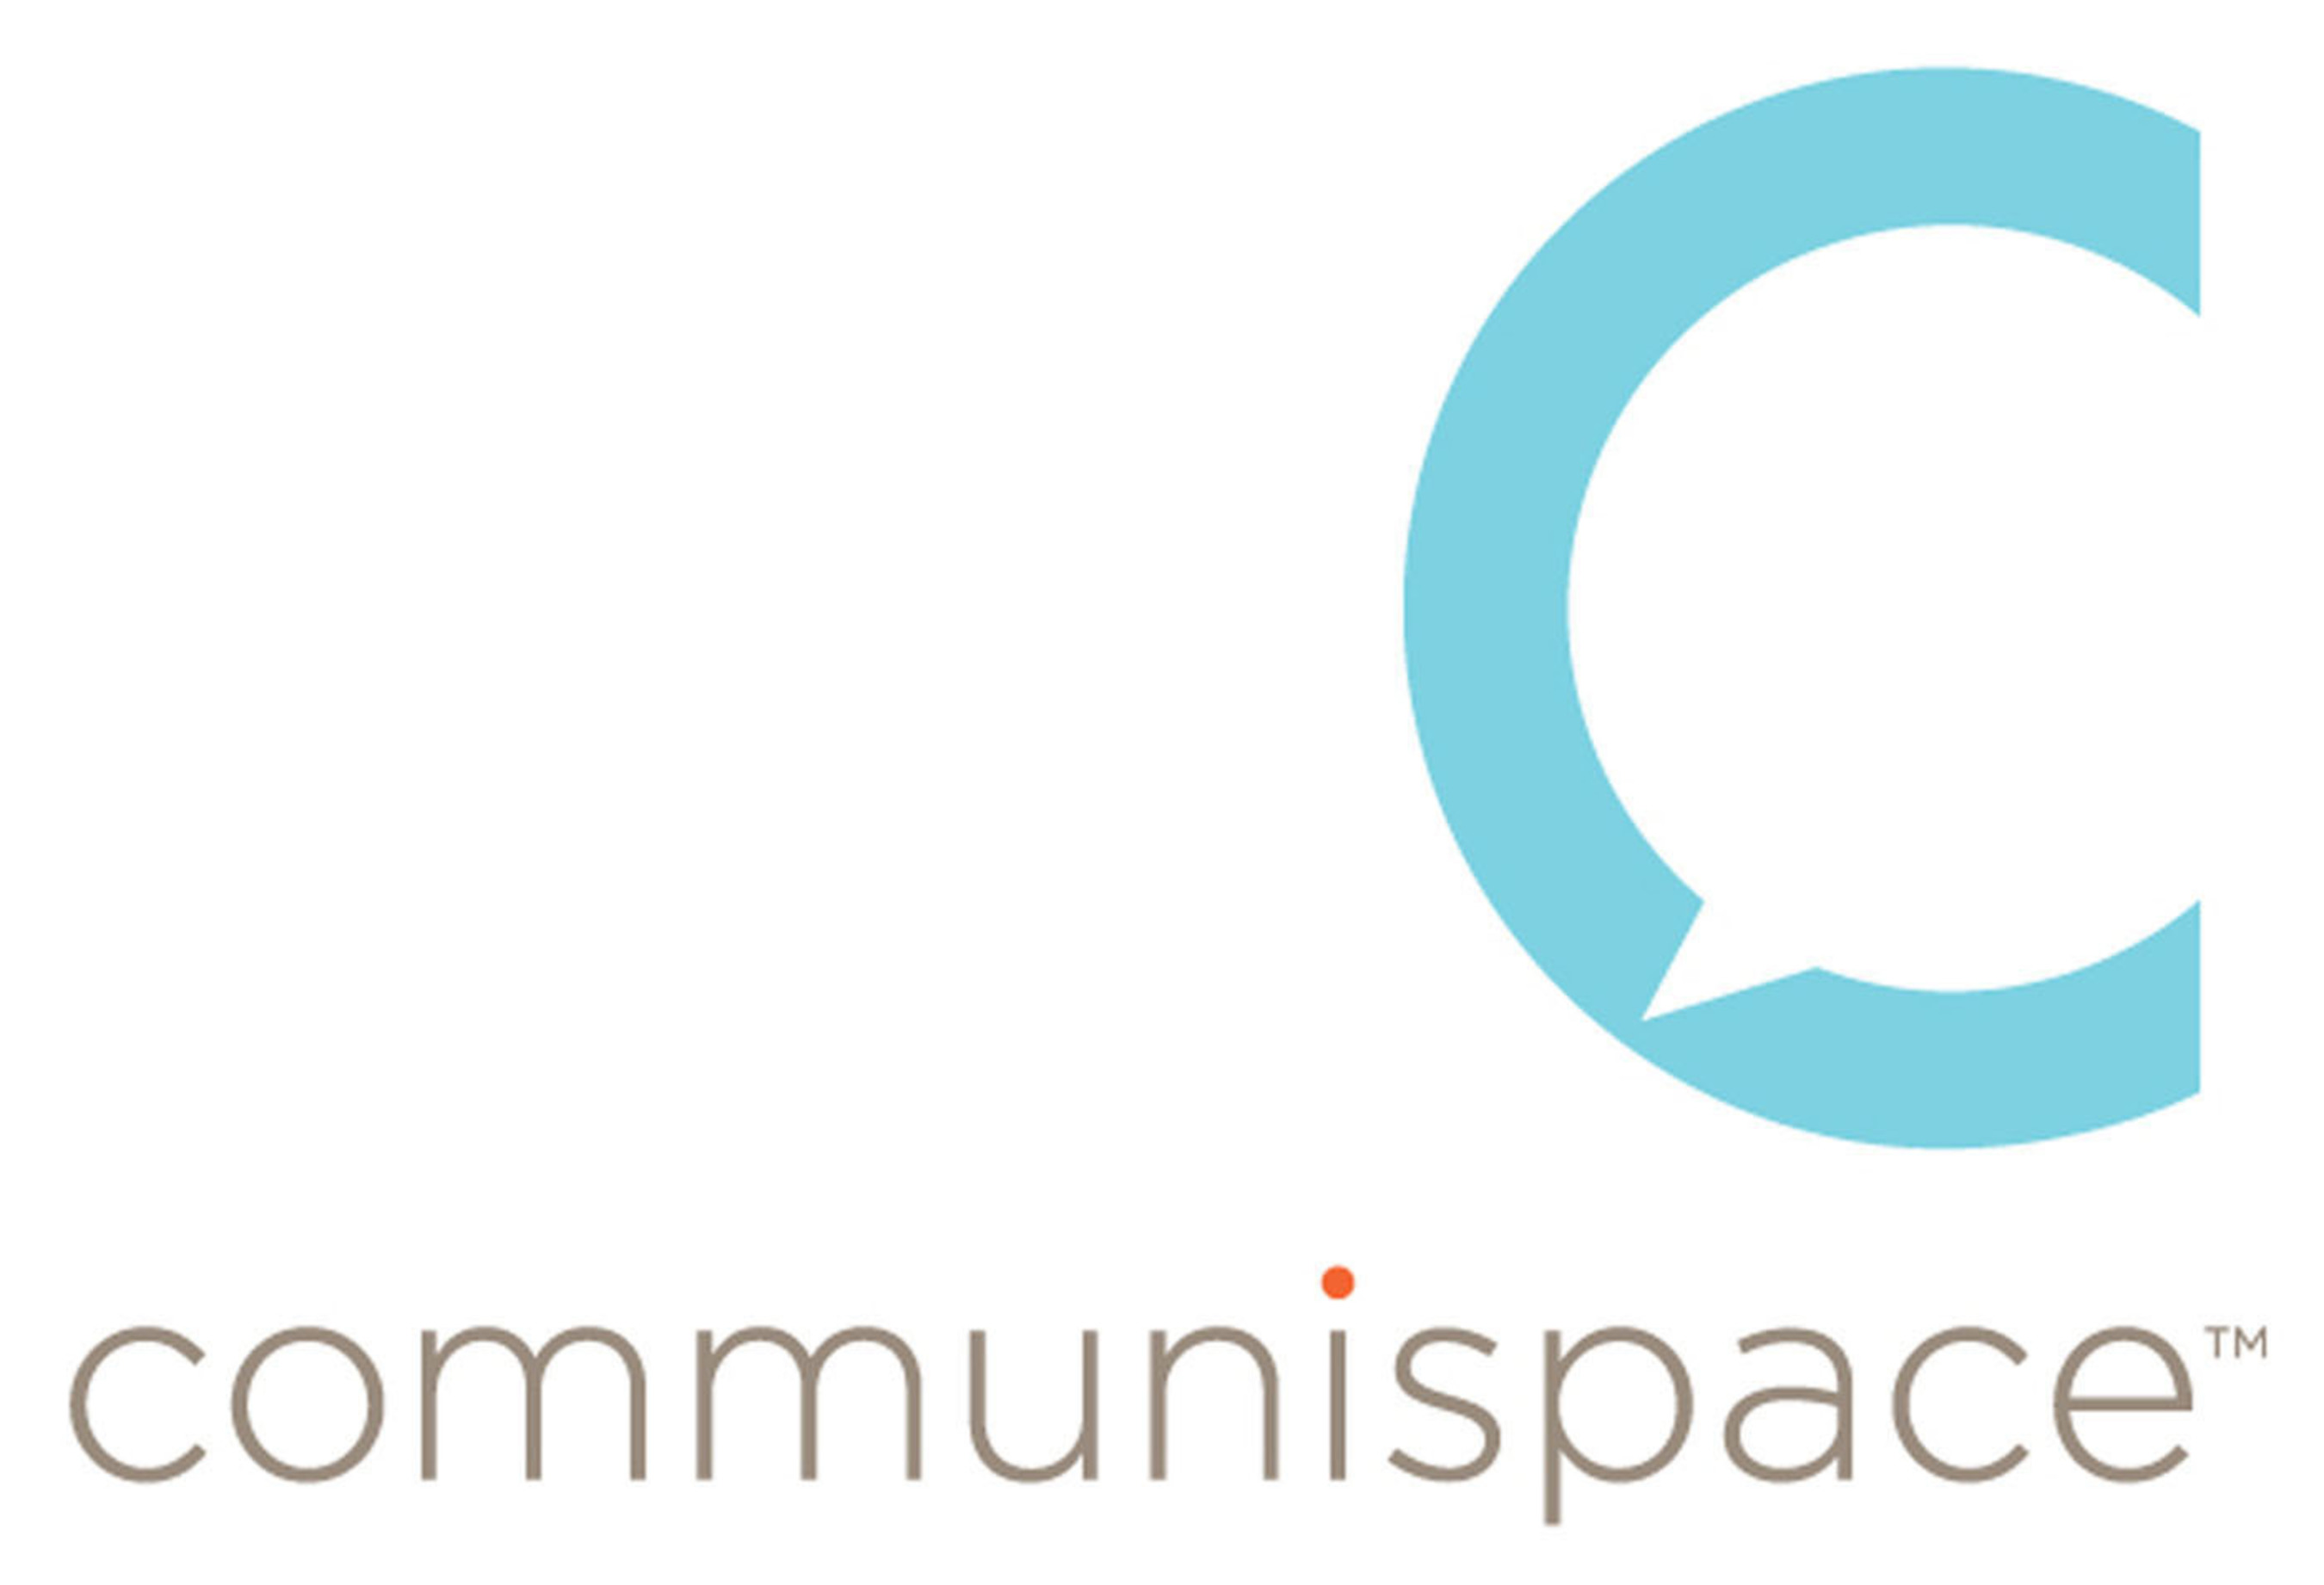 Communispace logo.